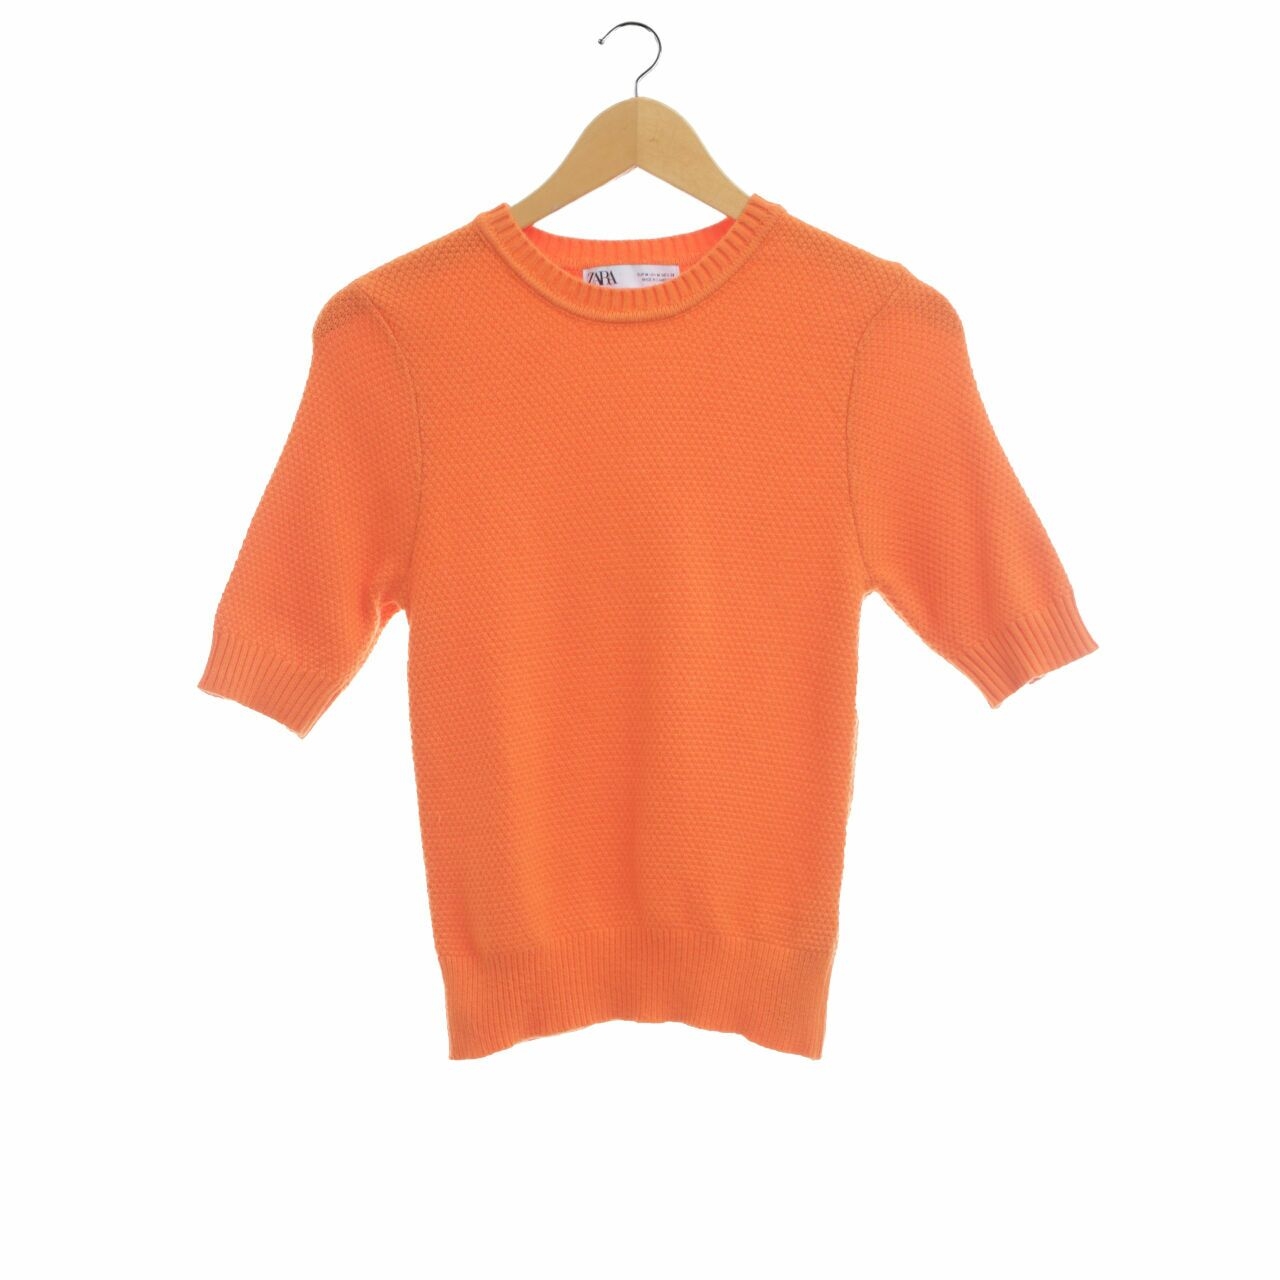 Zara Orange Short Sleeve Sweater